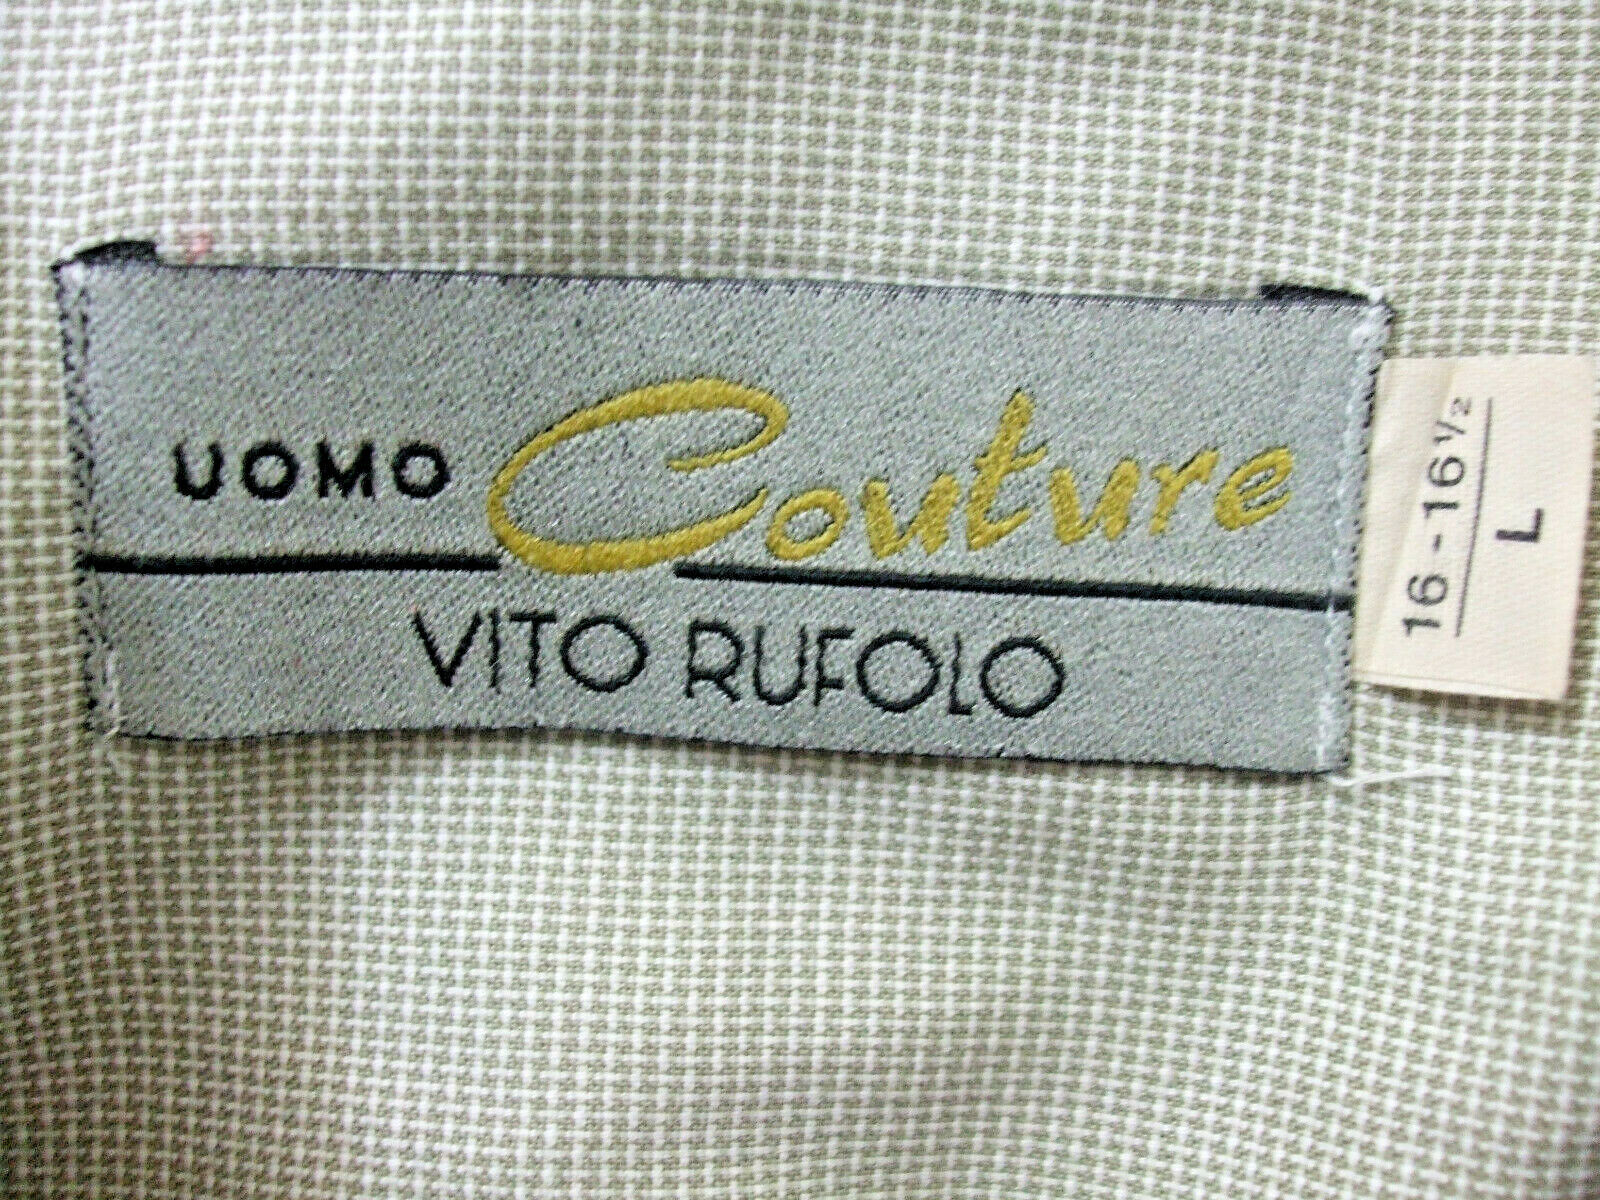 Uomo Couture Vito Rufolo Mens L 16-161/2 Shirt Beige Lg Sleeve Button Down  Italy | eBay